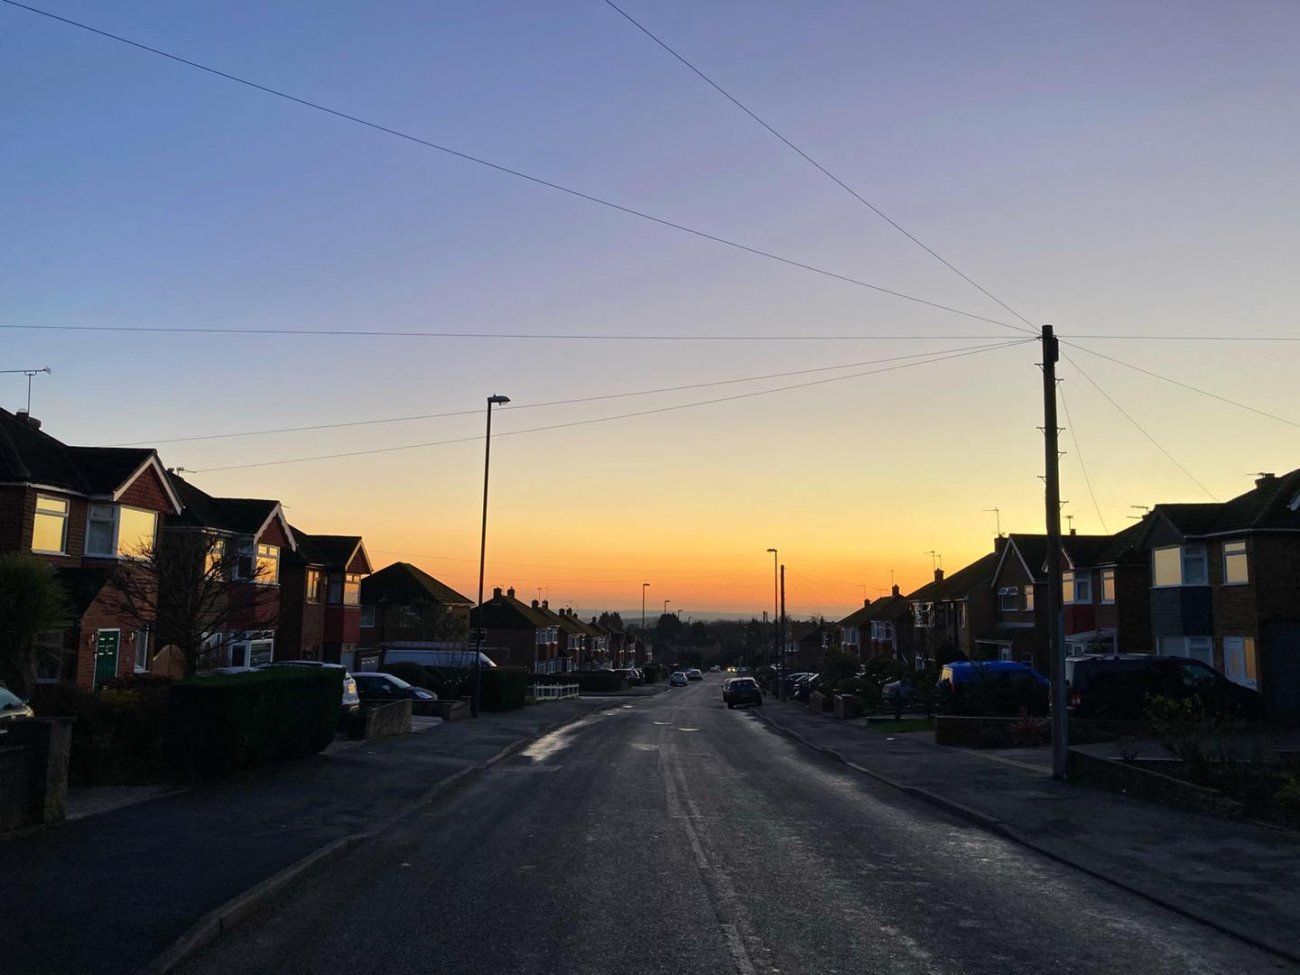 Photograph of Sunset over Sandringham Drive